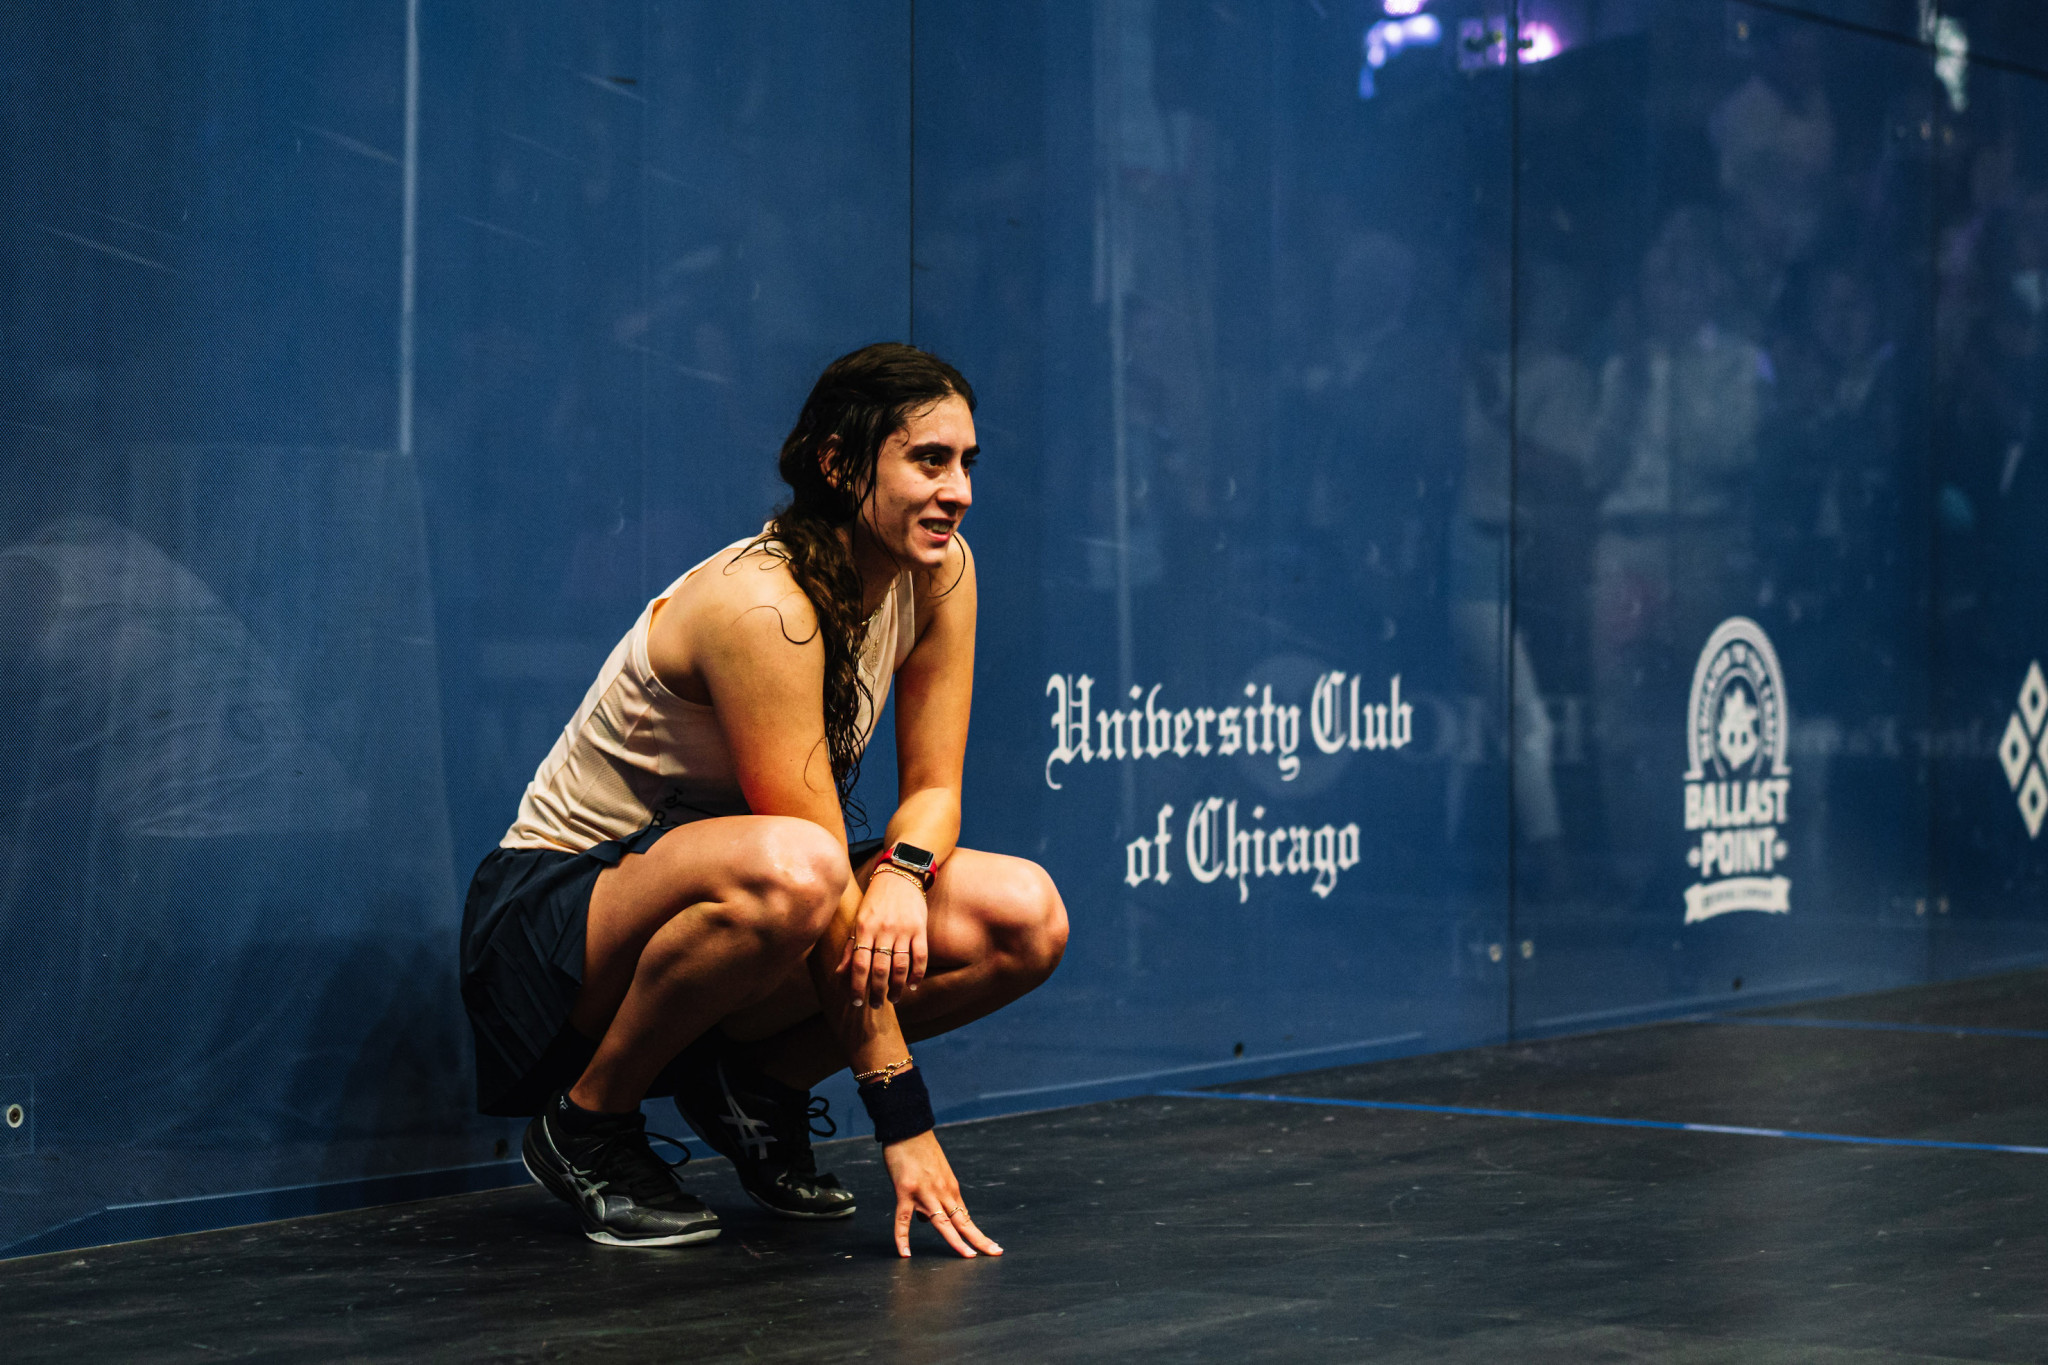 Nour El Sherbini is now a five-time world champion ©PSA